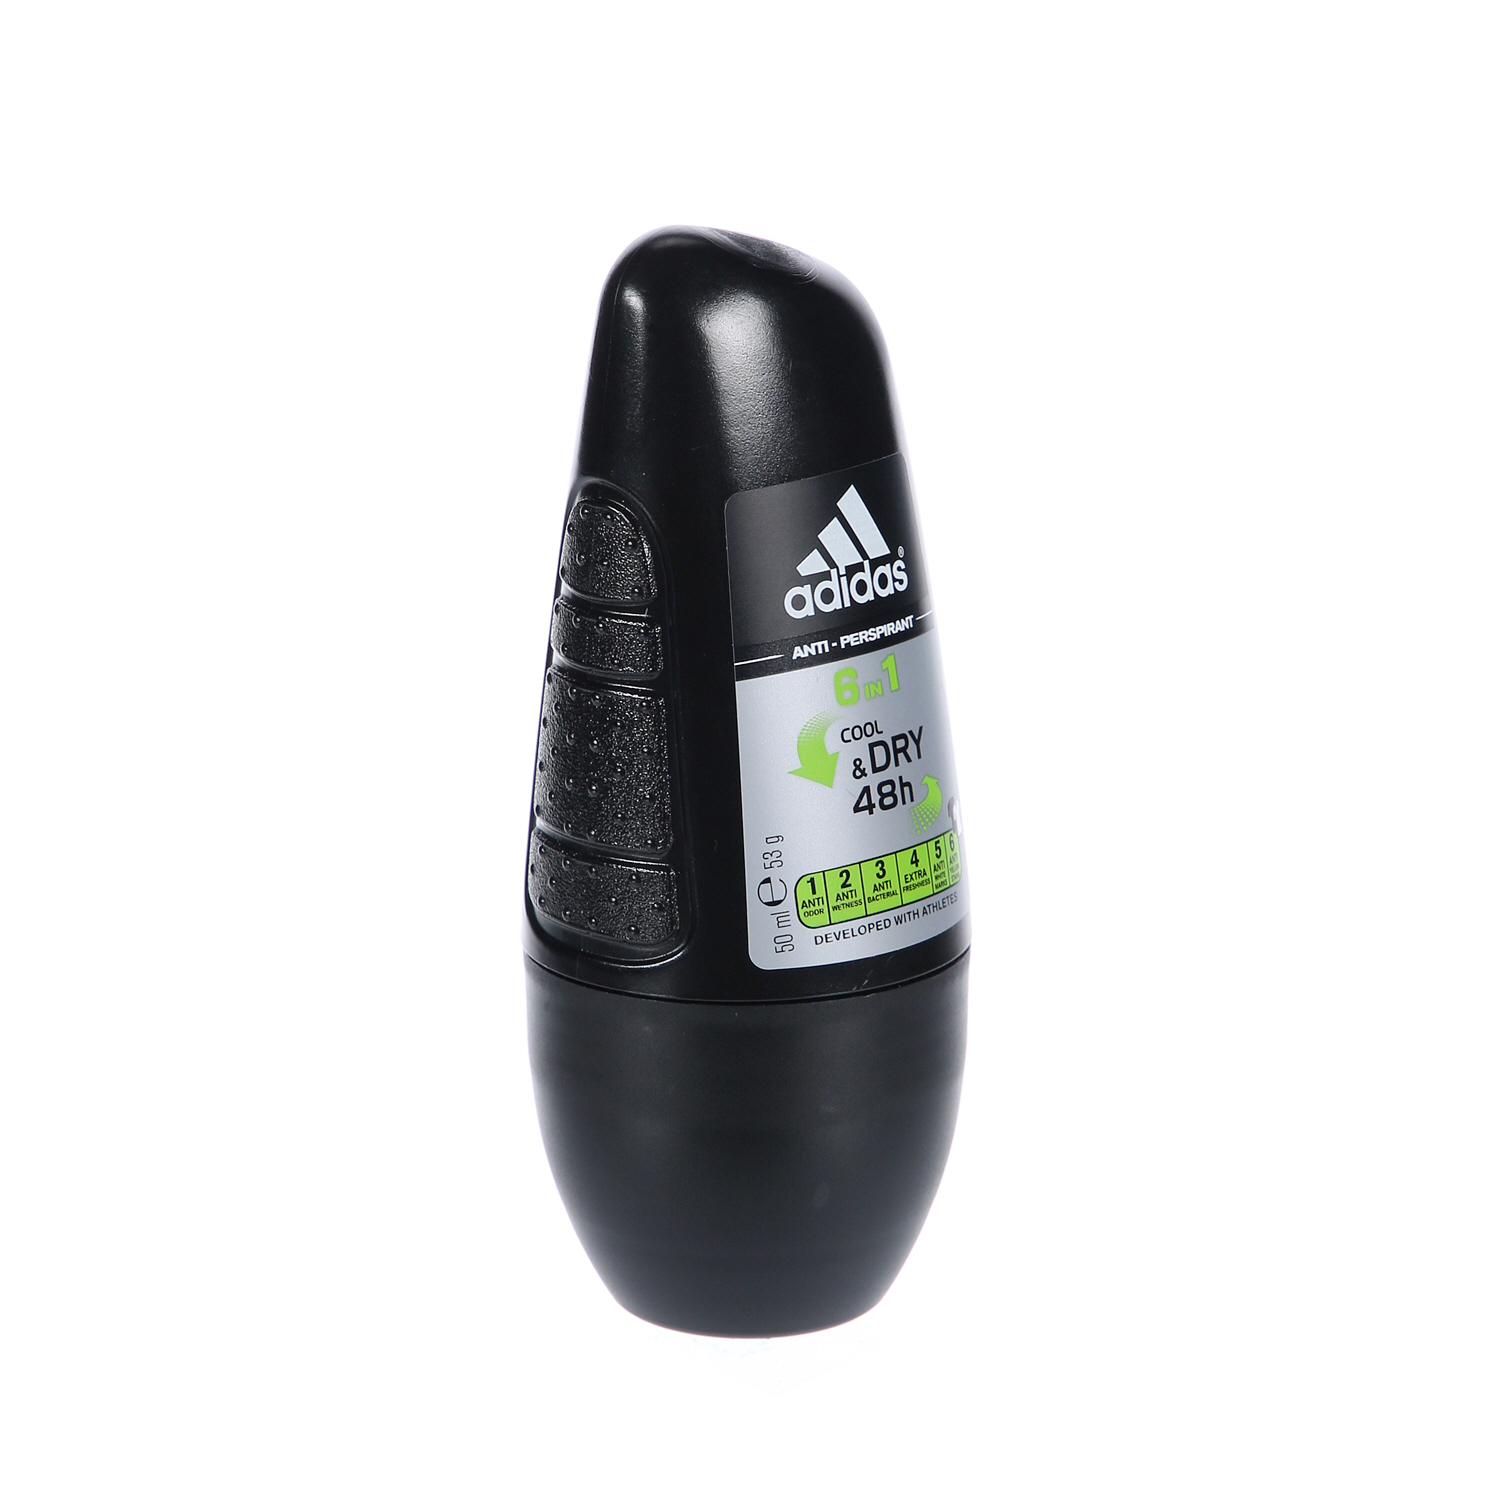 Adidas Roll On Male Regular 6In1 50ml